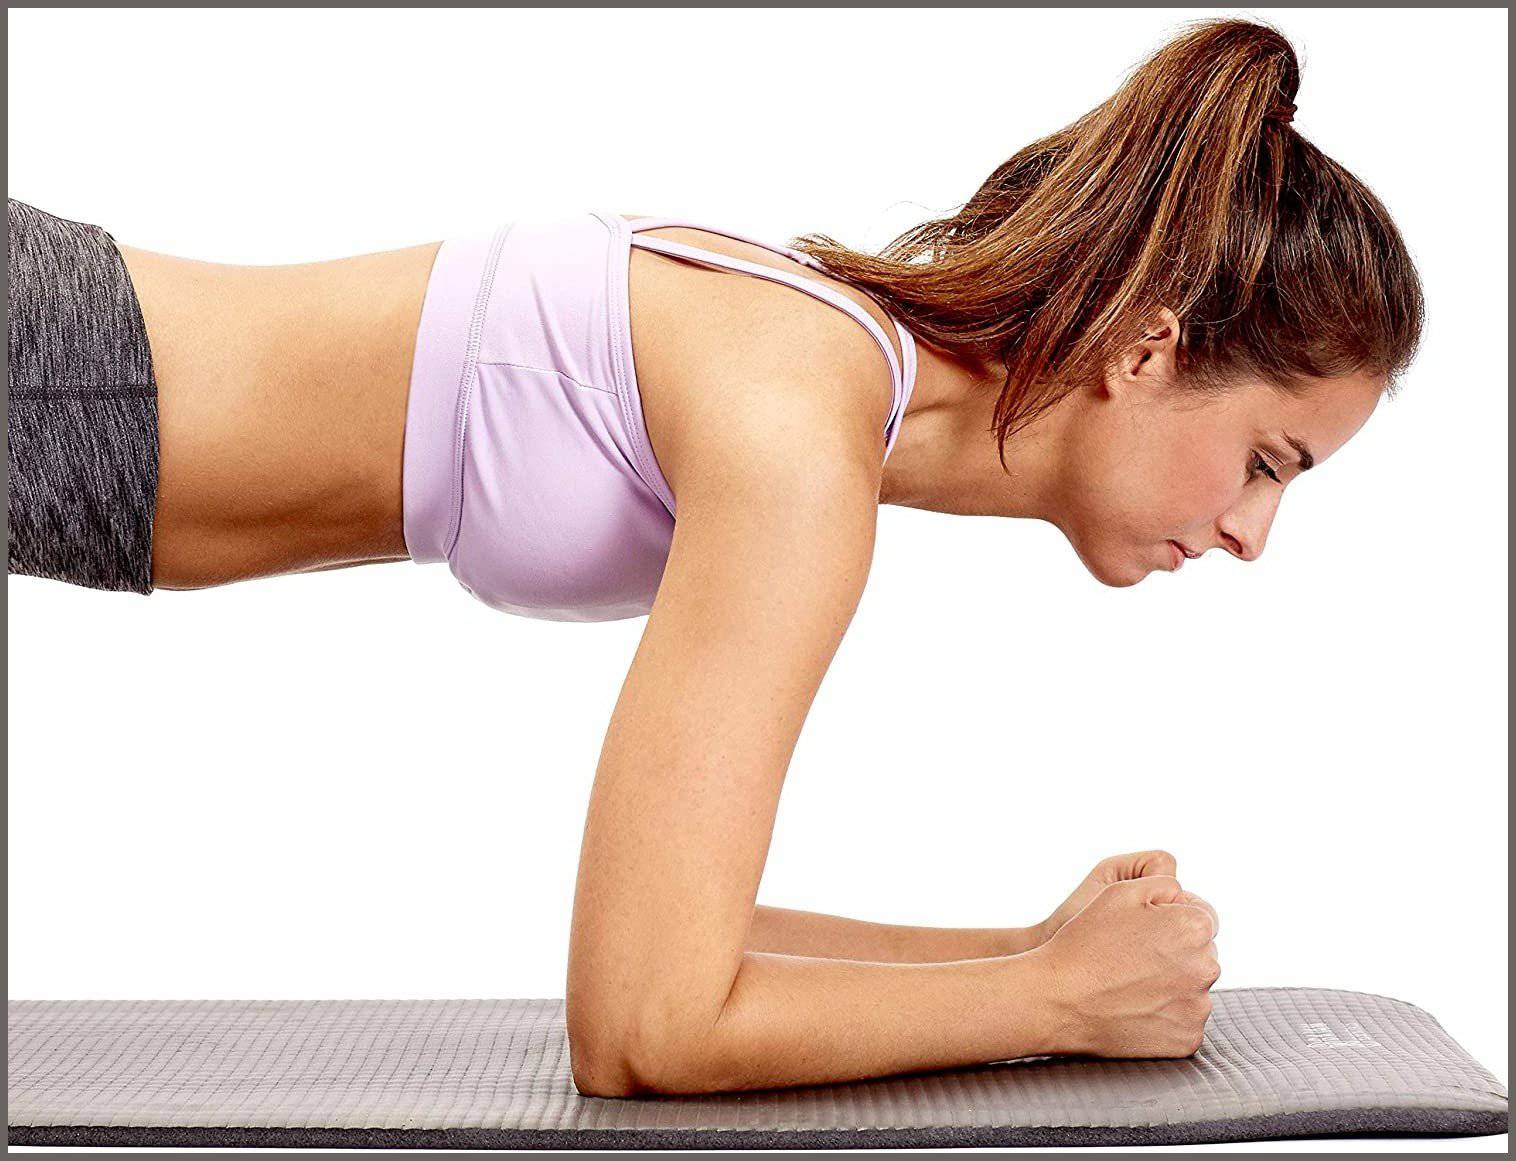  Gaiam Yoga Mat Performance TPE Exercise & Fitness Mat